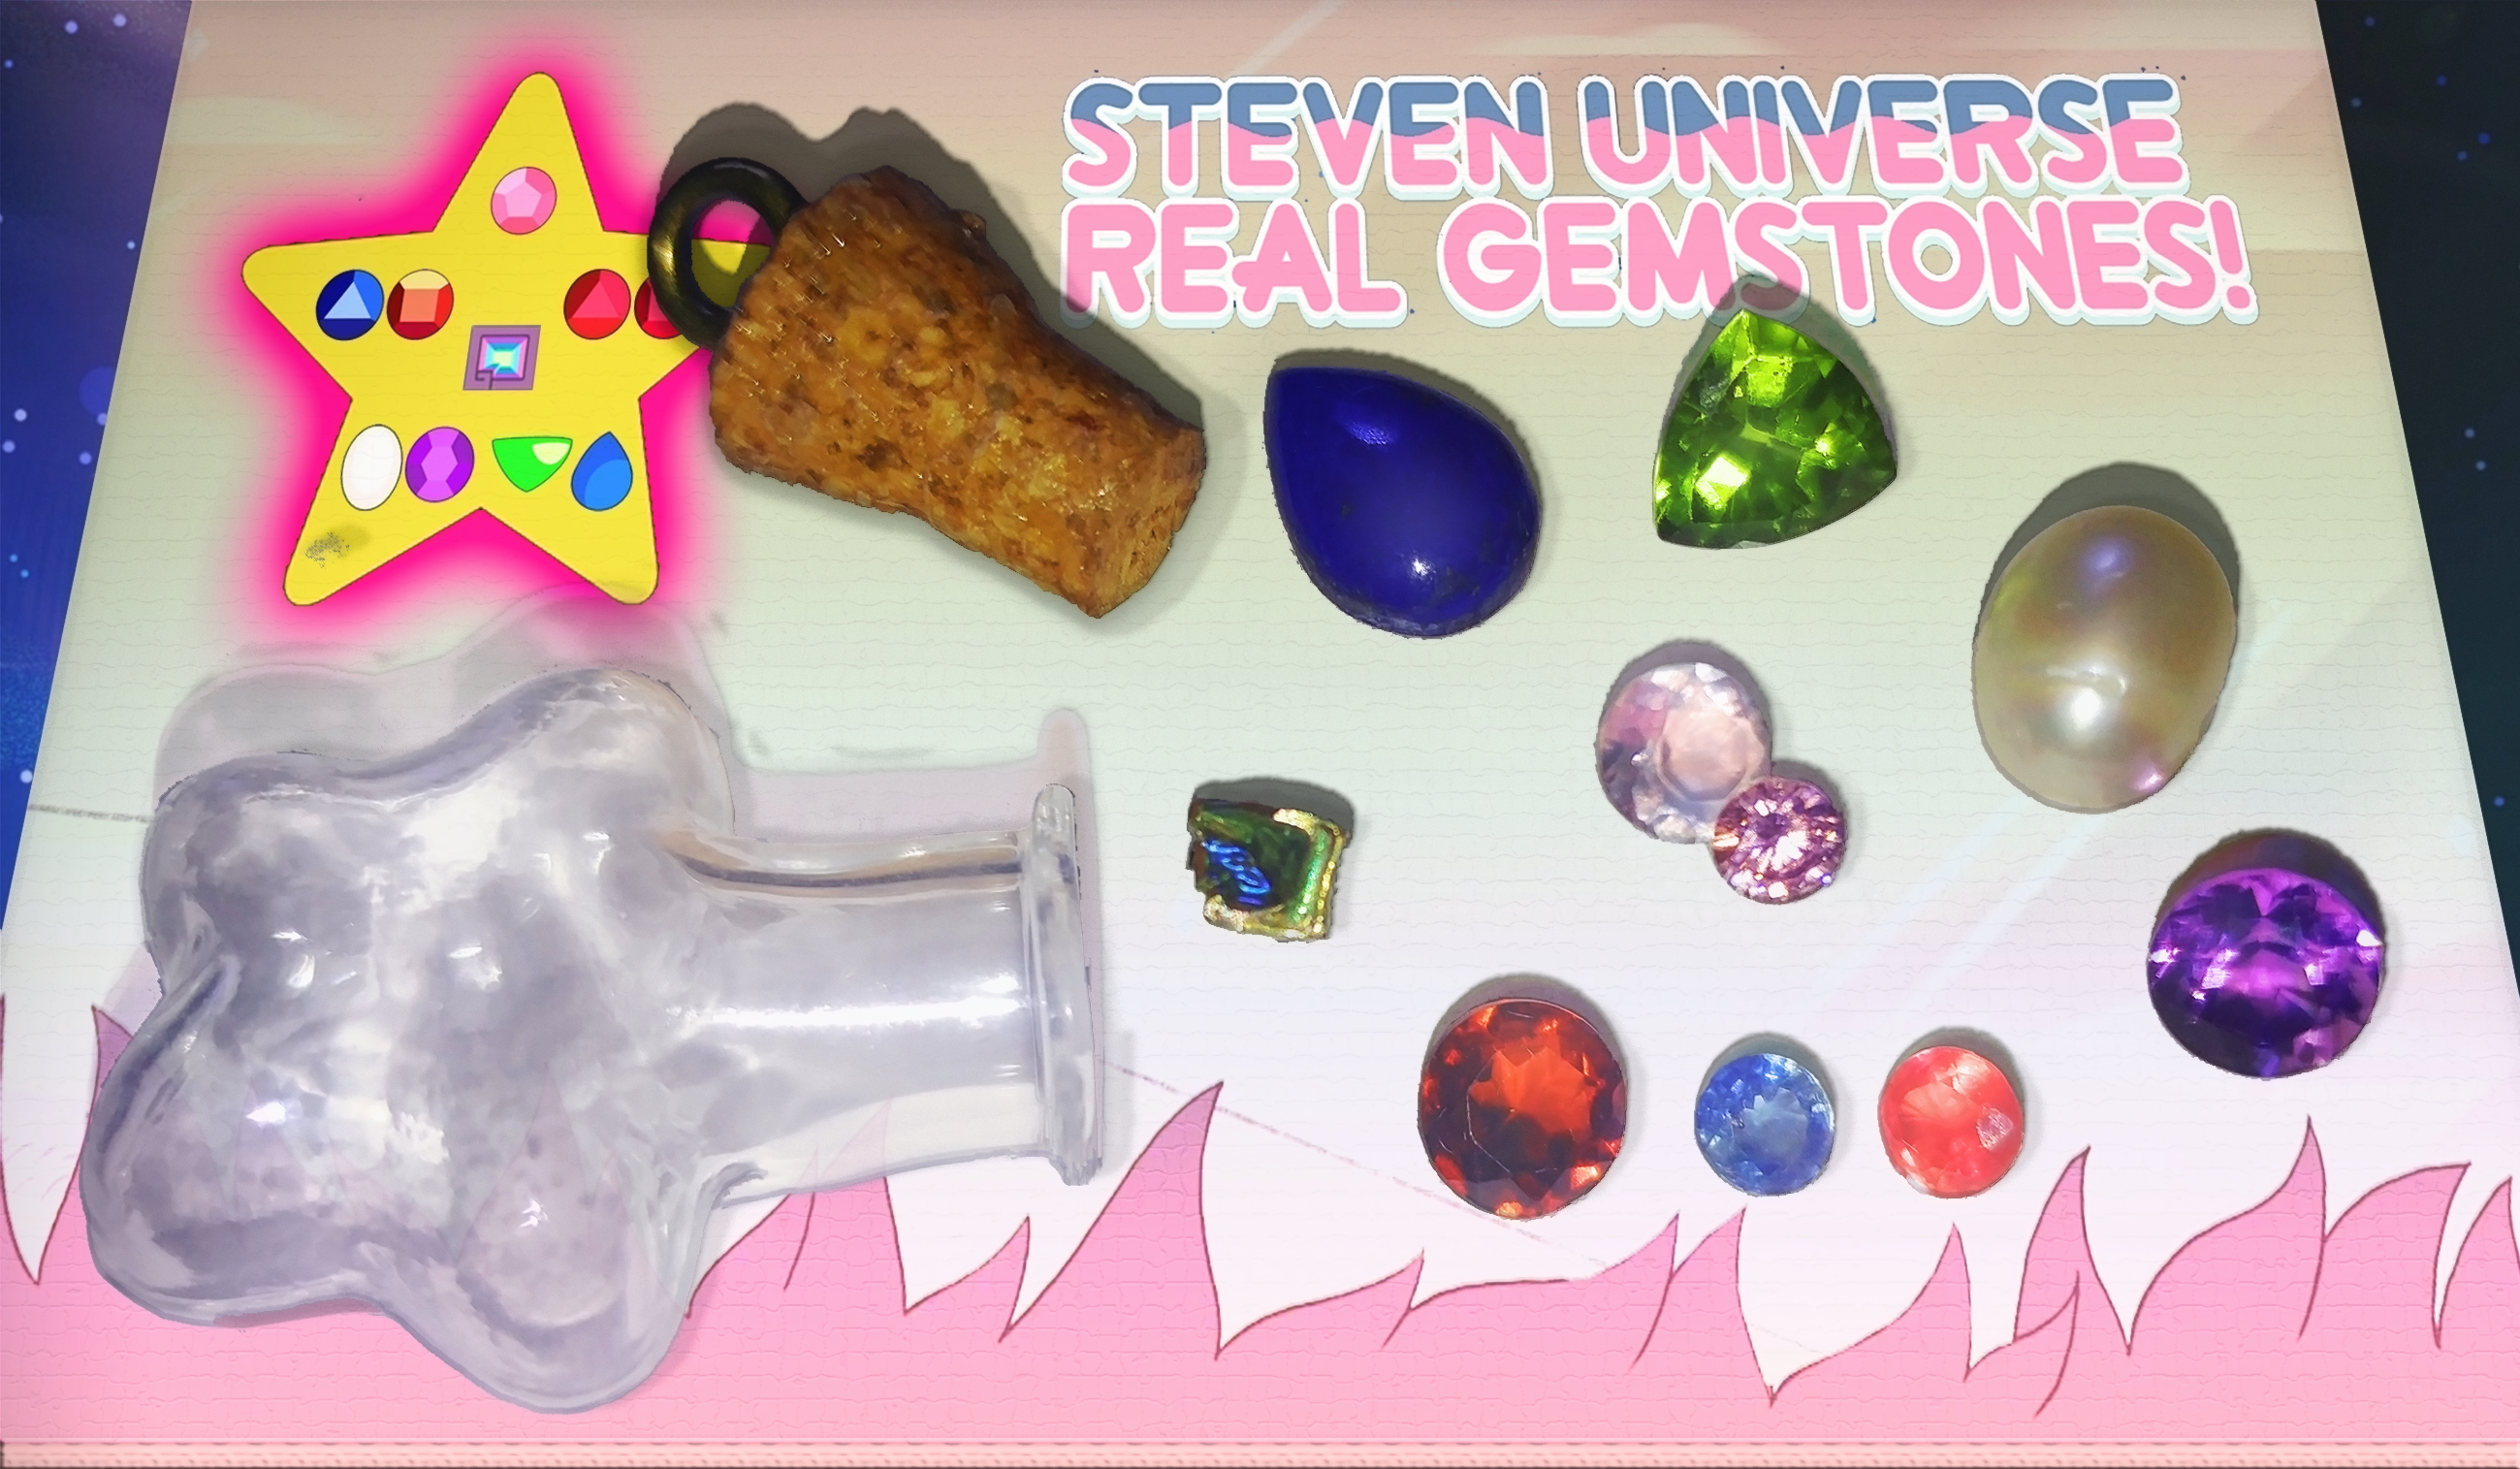 Real Crystal Gems-stones!